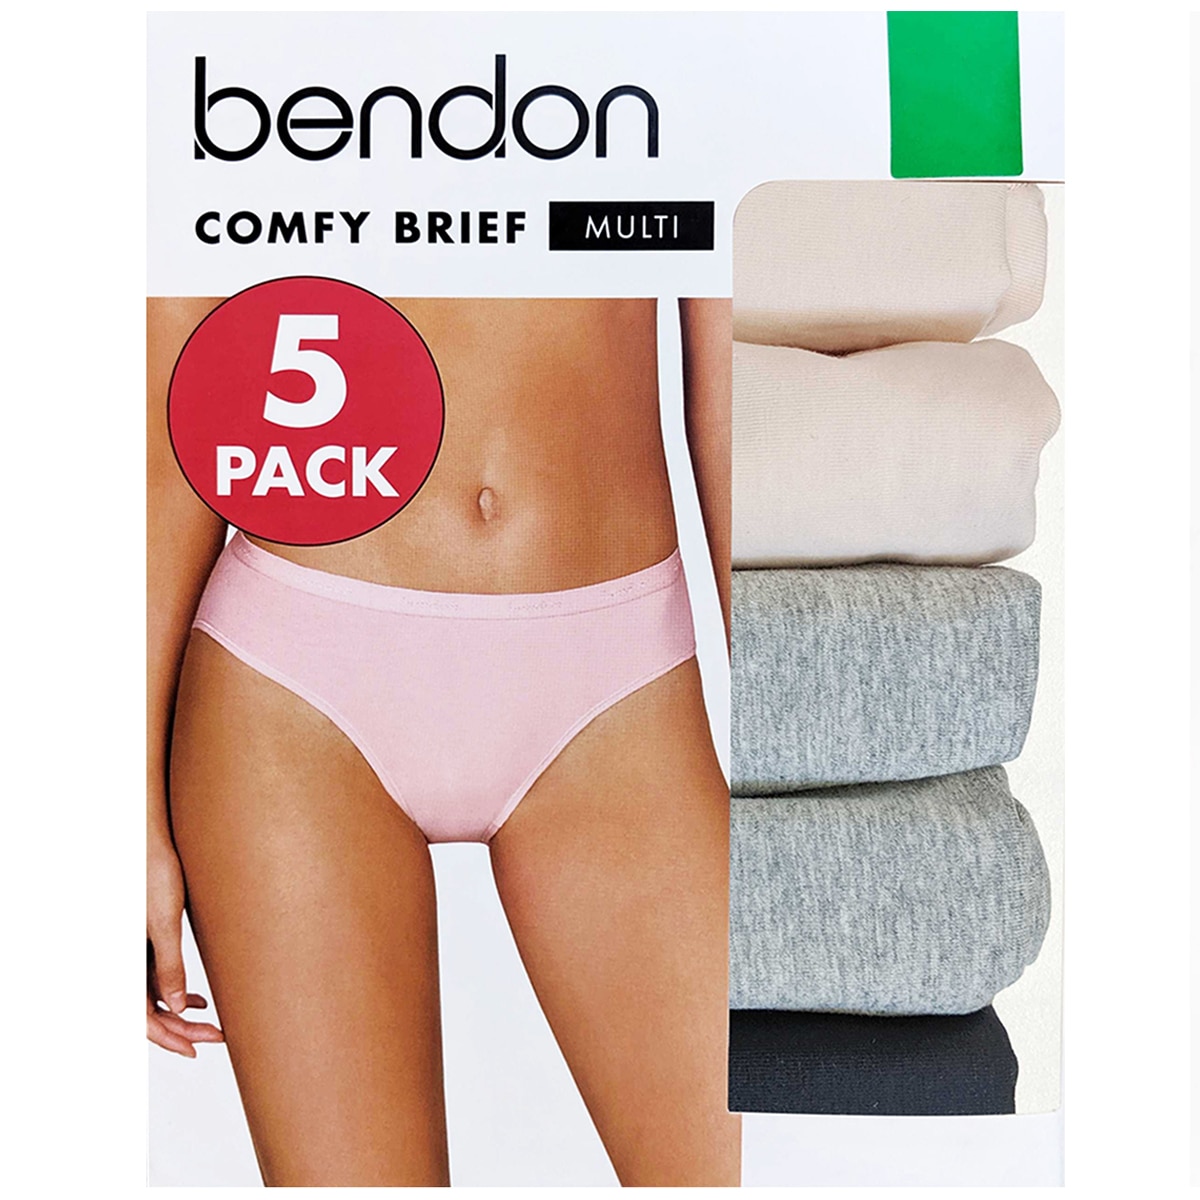 Bendon Comfy Brief 5 Pack - Large - Multi Colour